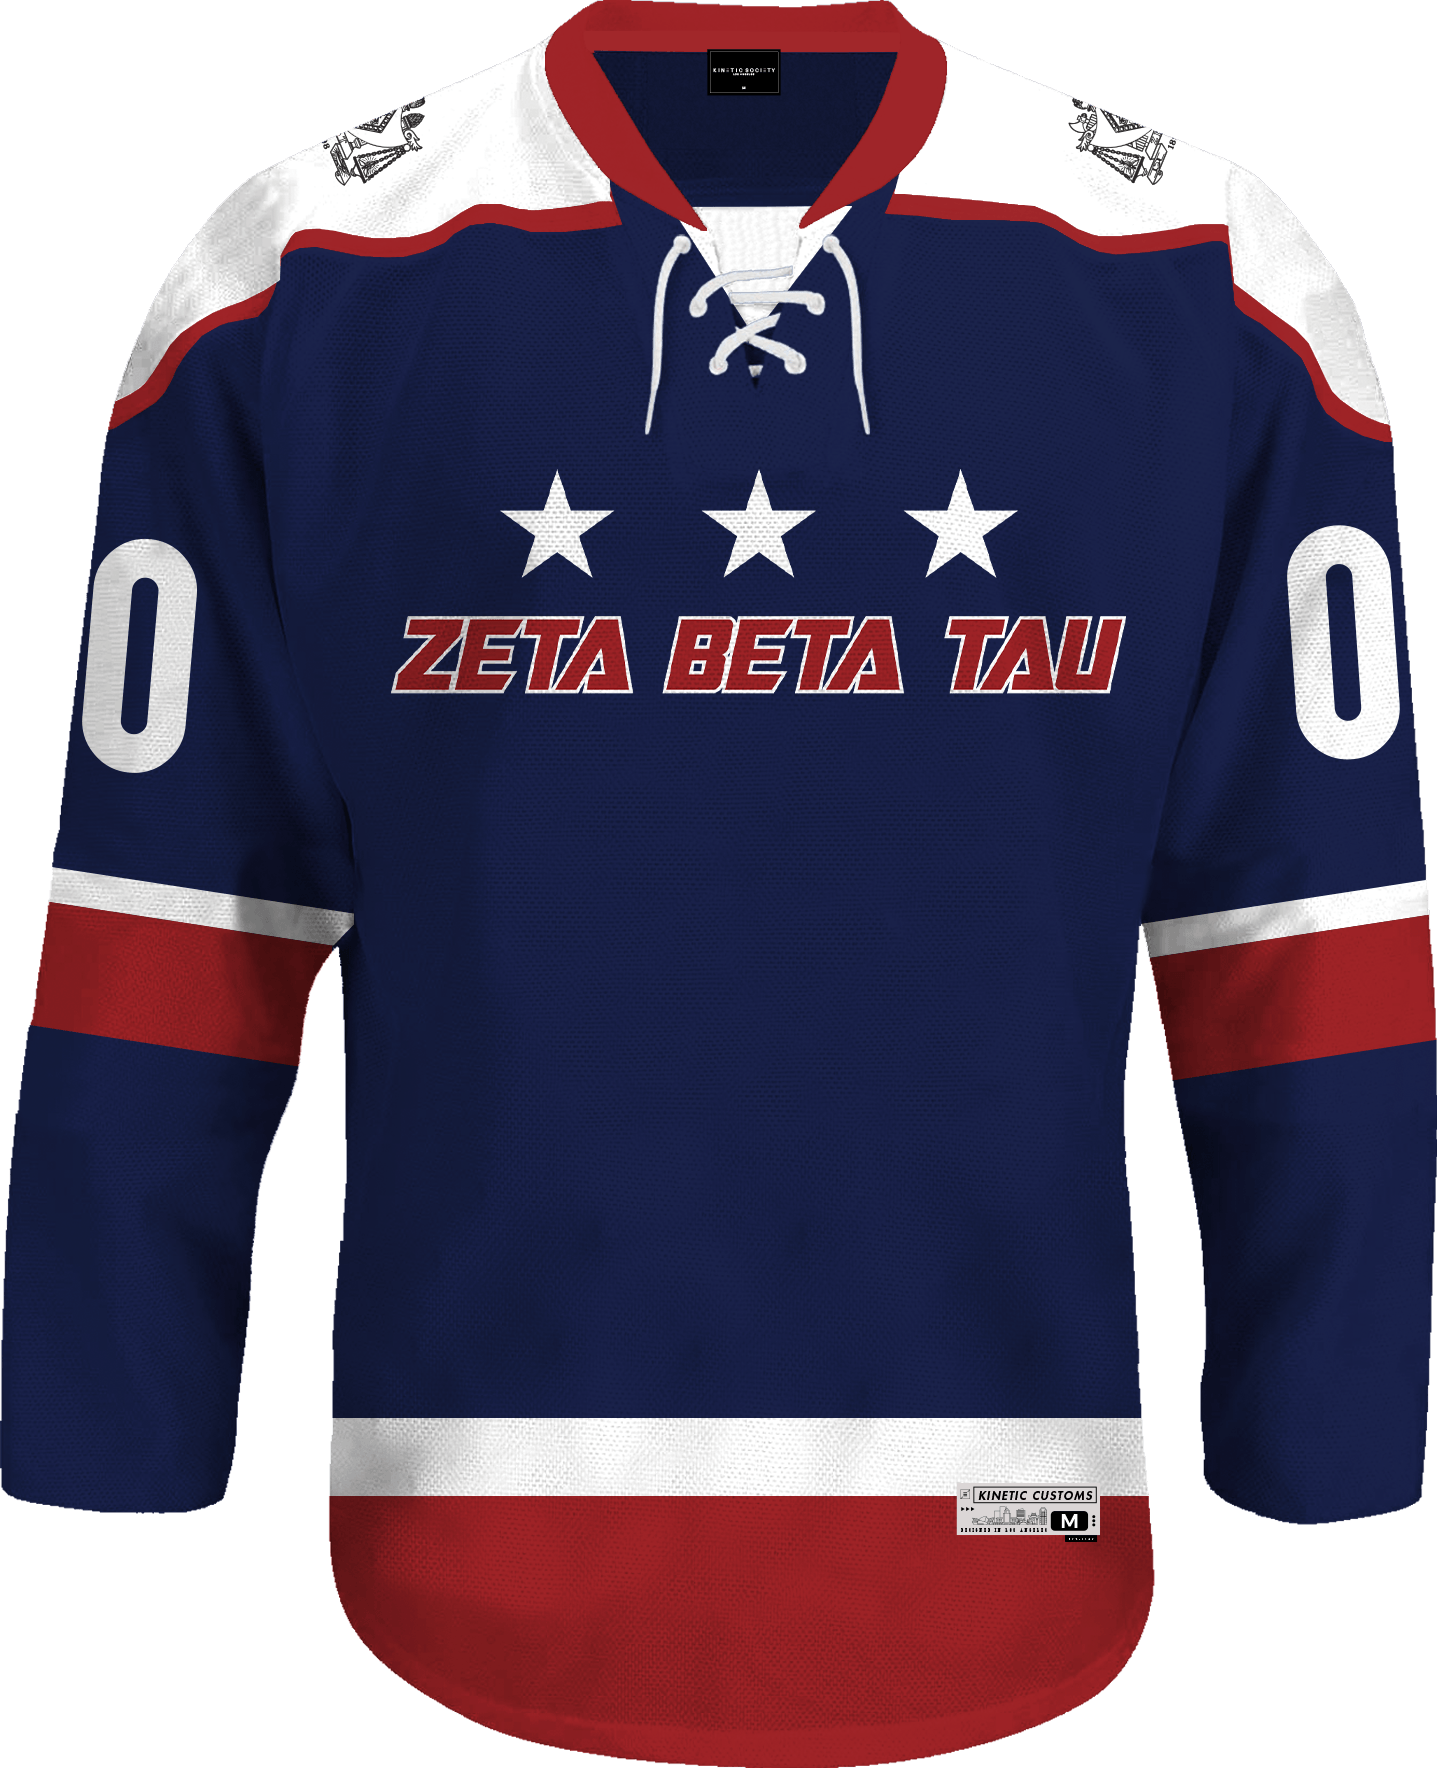 Zeta Beta Tau - Fame Hockey Jersey - Kinetic Society